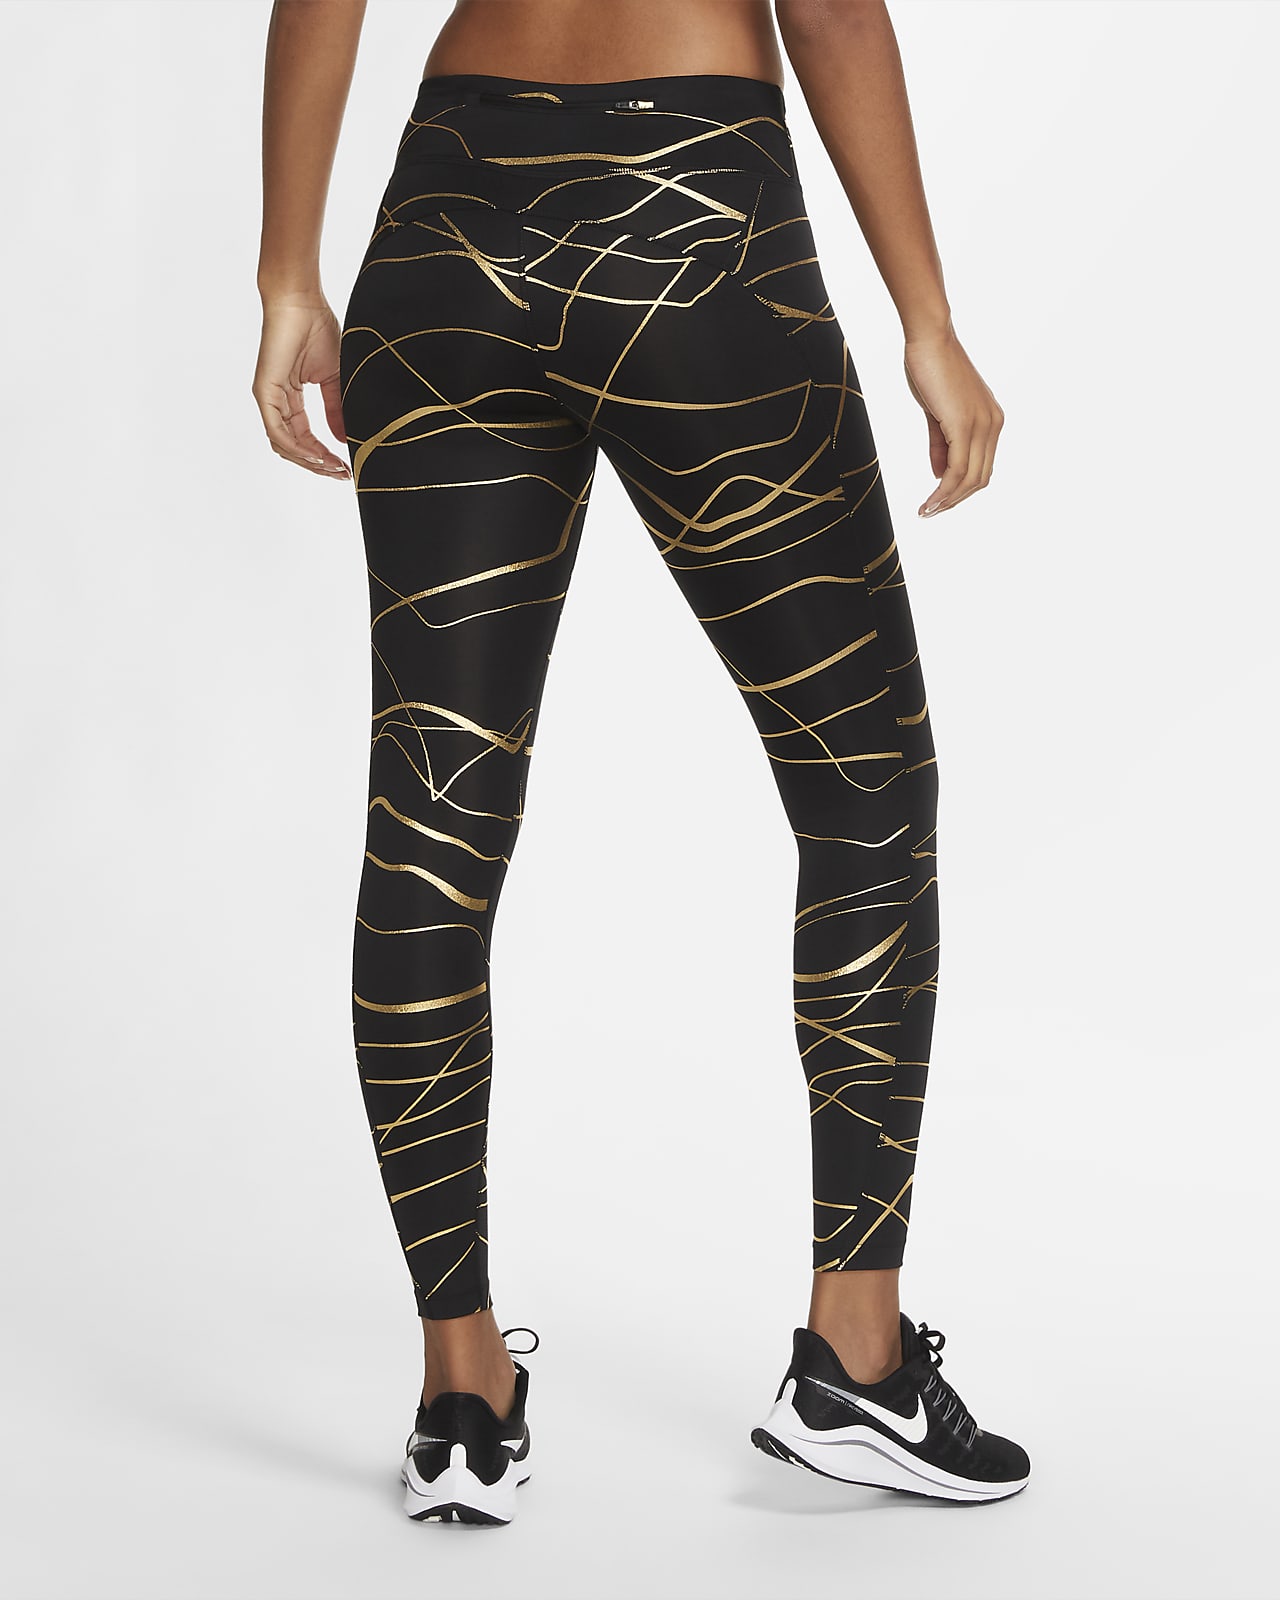 NWT Nike women's M leggings black gold swoosh tights ladies workout | Fit  women, Black leggings, Nike women